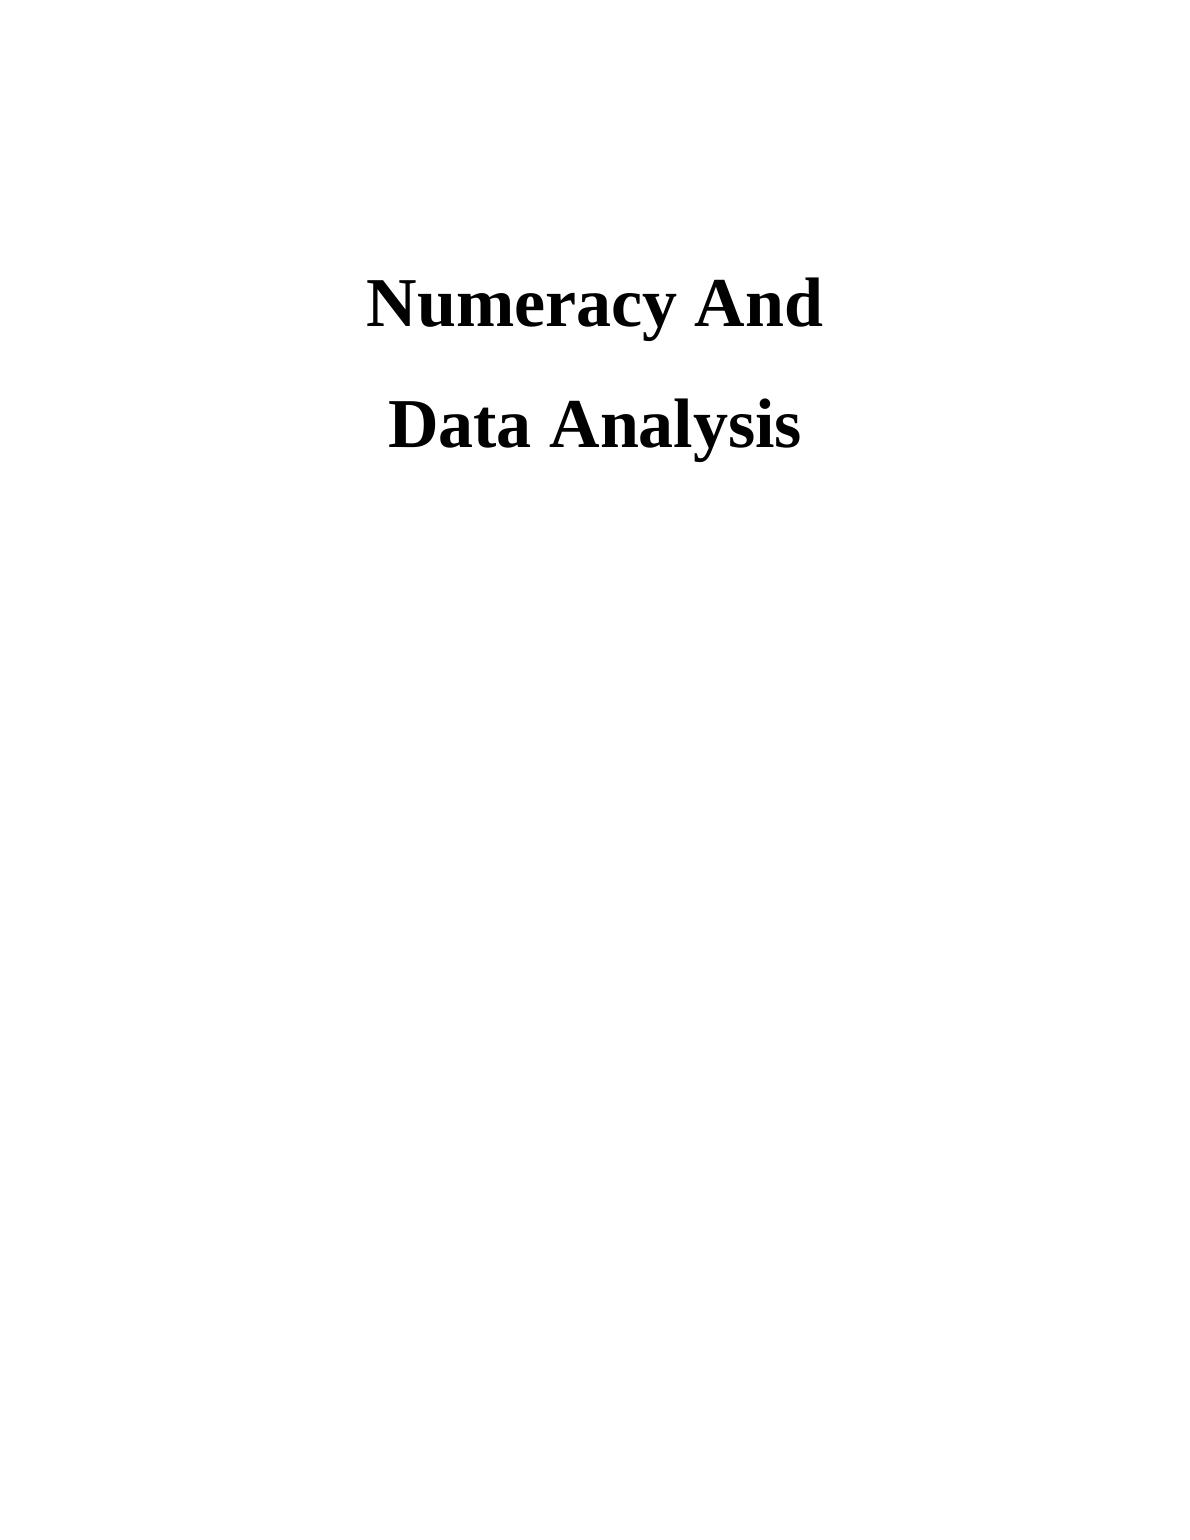 Numeracy And Data Analysis_1